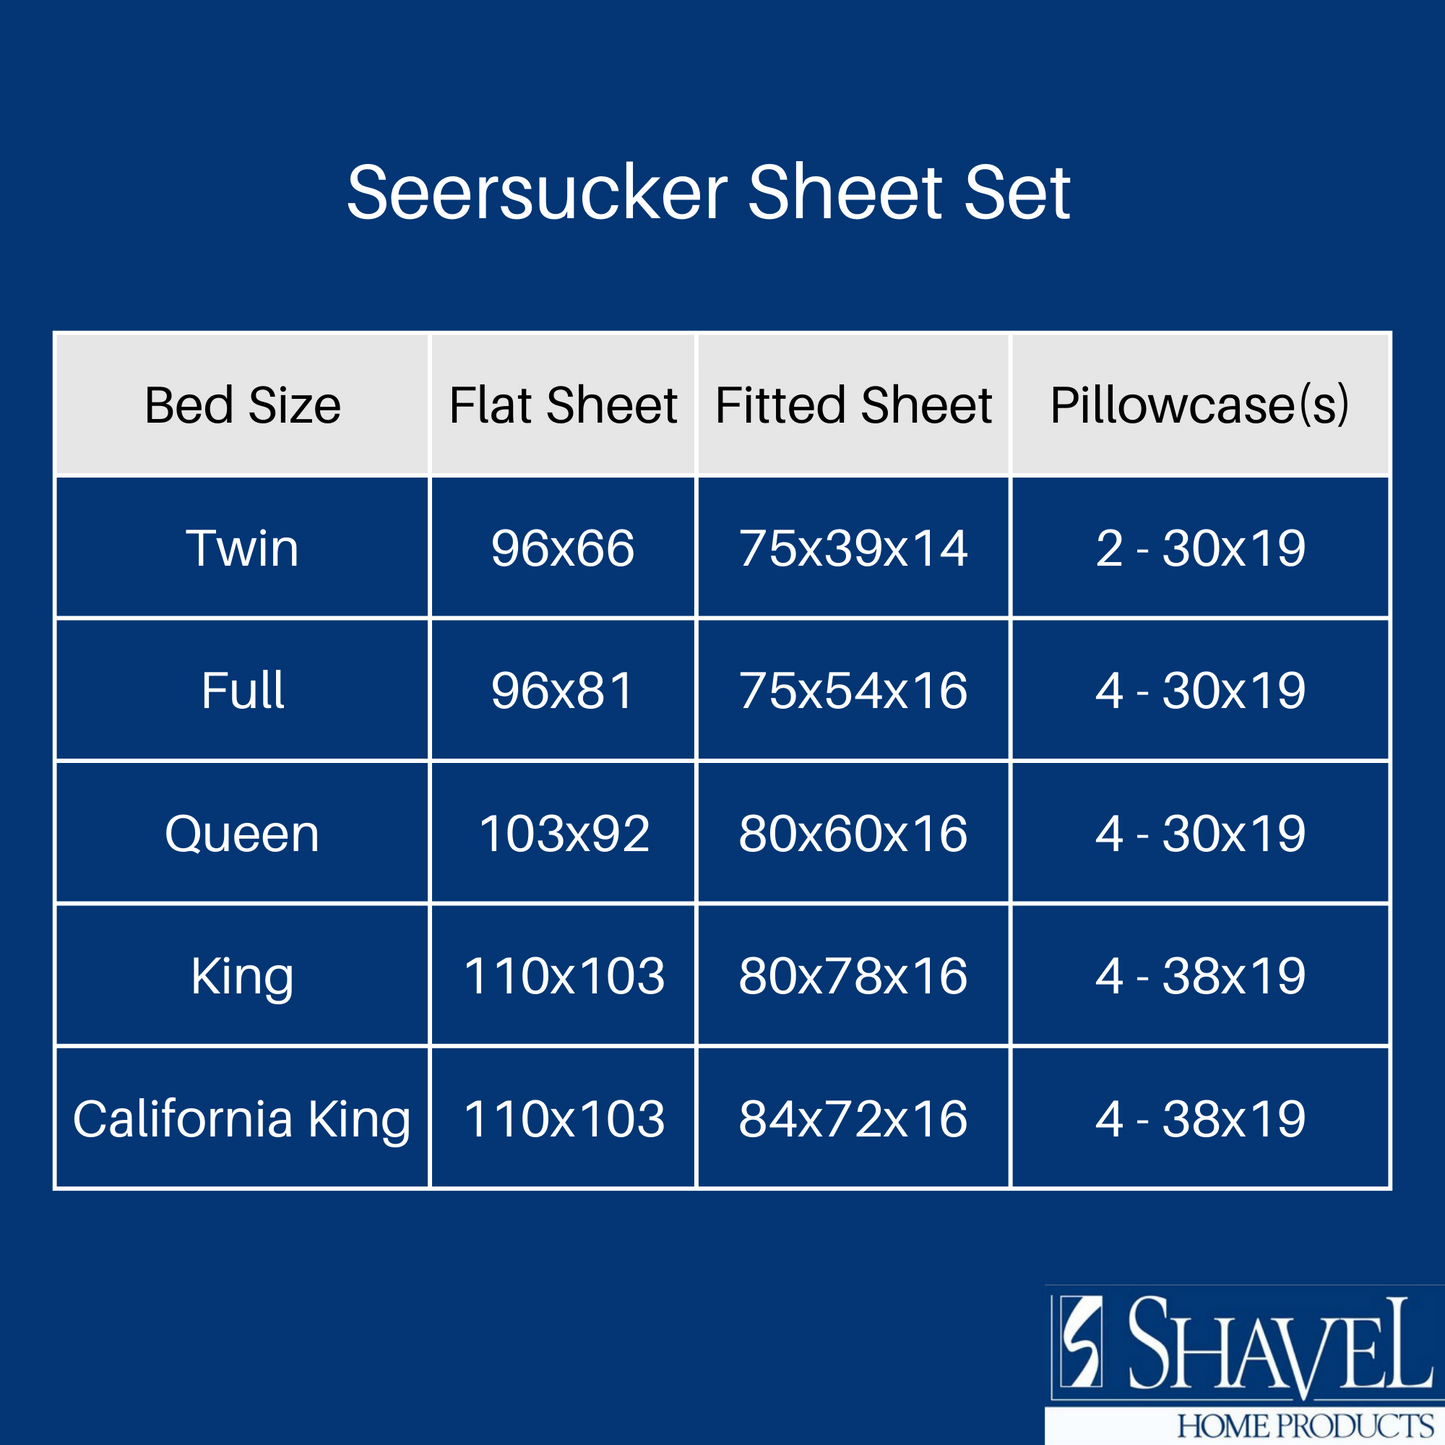 Seersucker Sheet Set with extra pillowcases